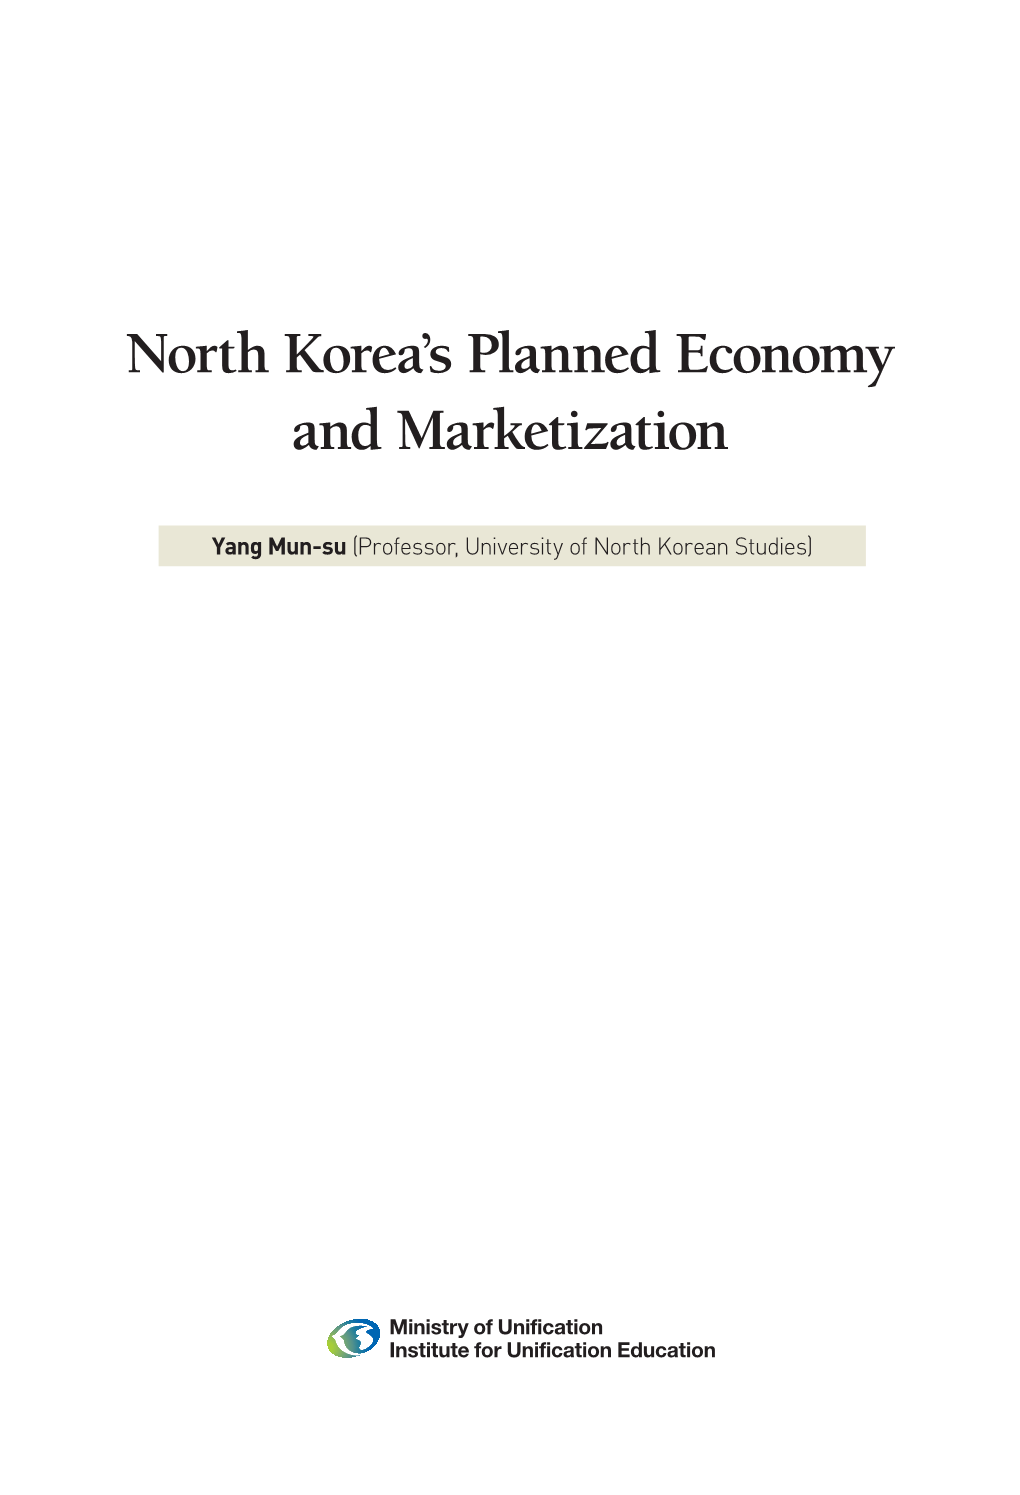 North Korea's Planned Economy and Marketization.Pdf